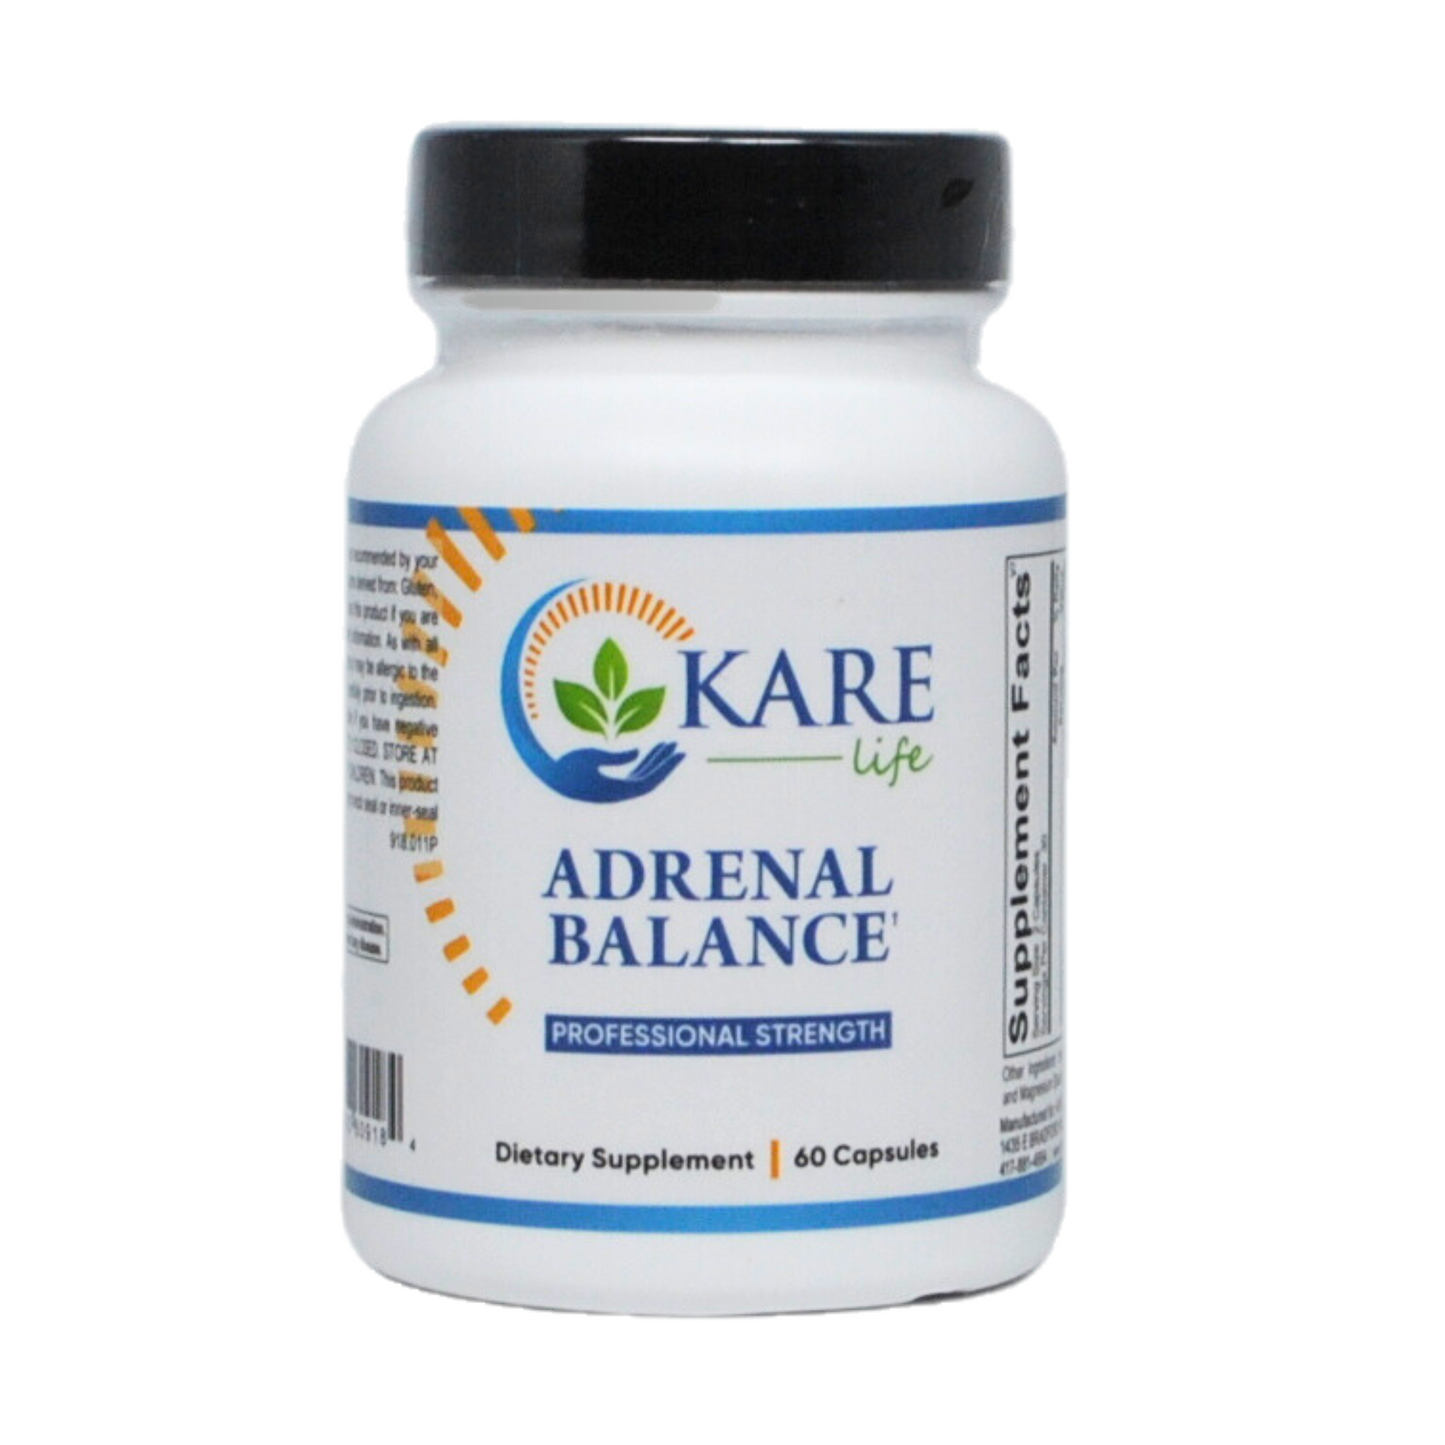 Adrenal Balance